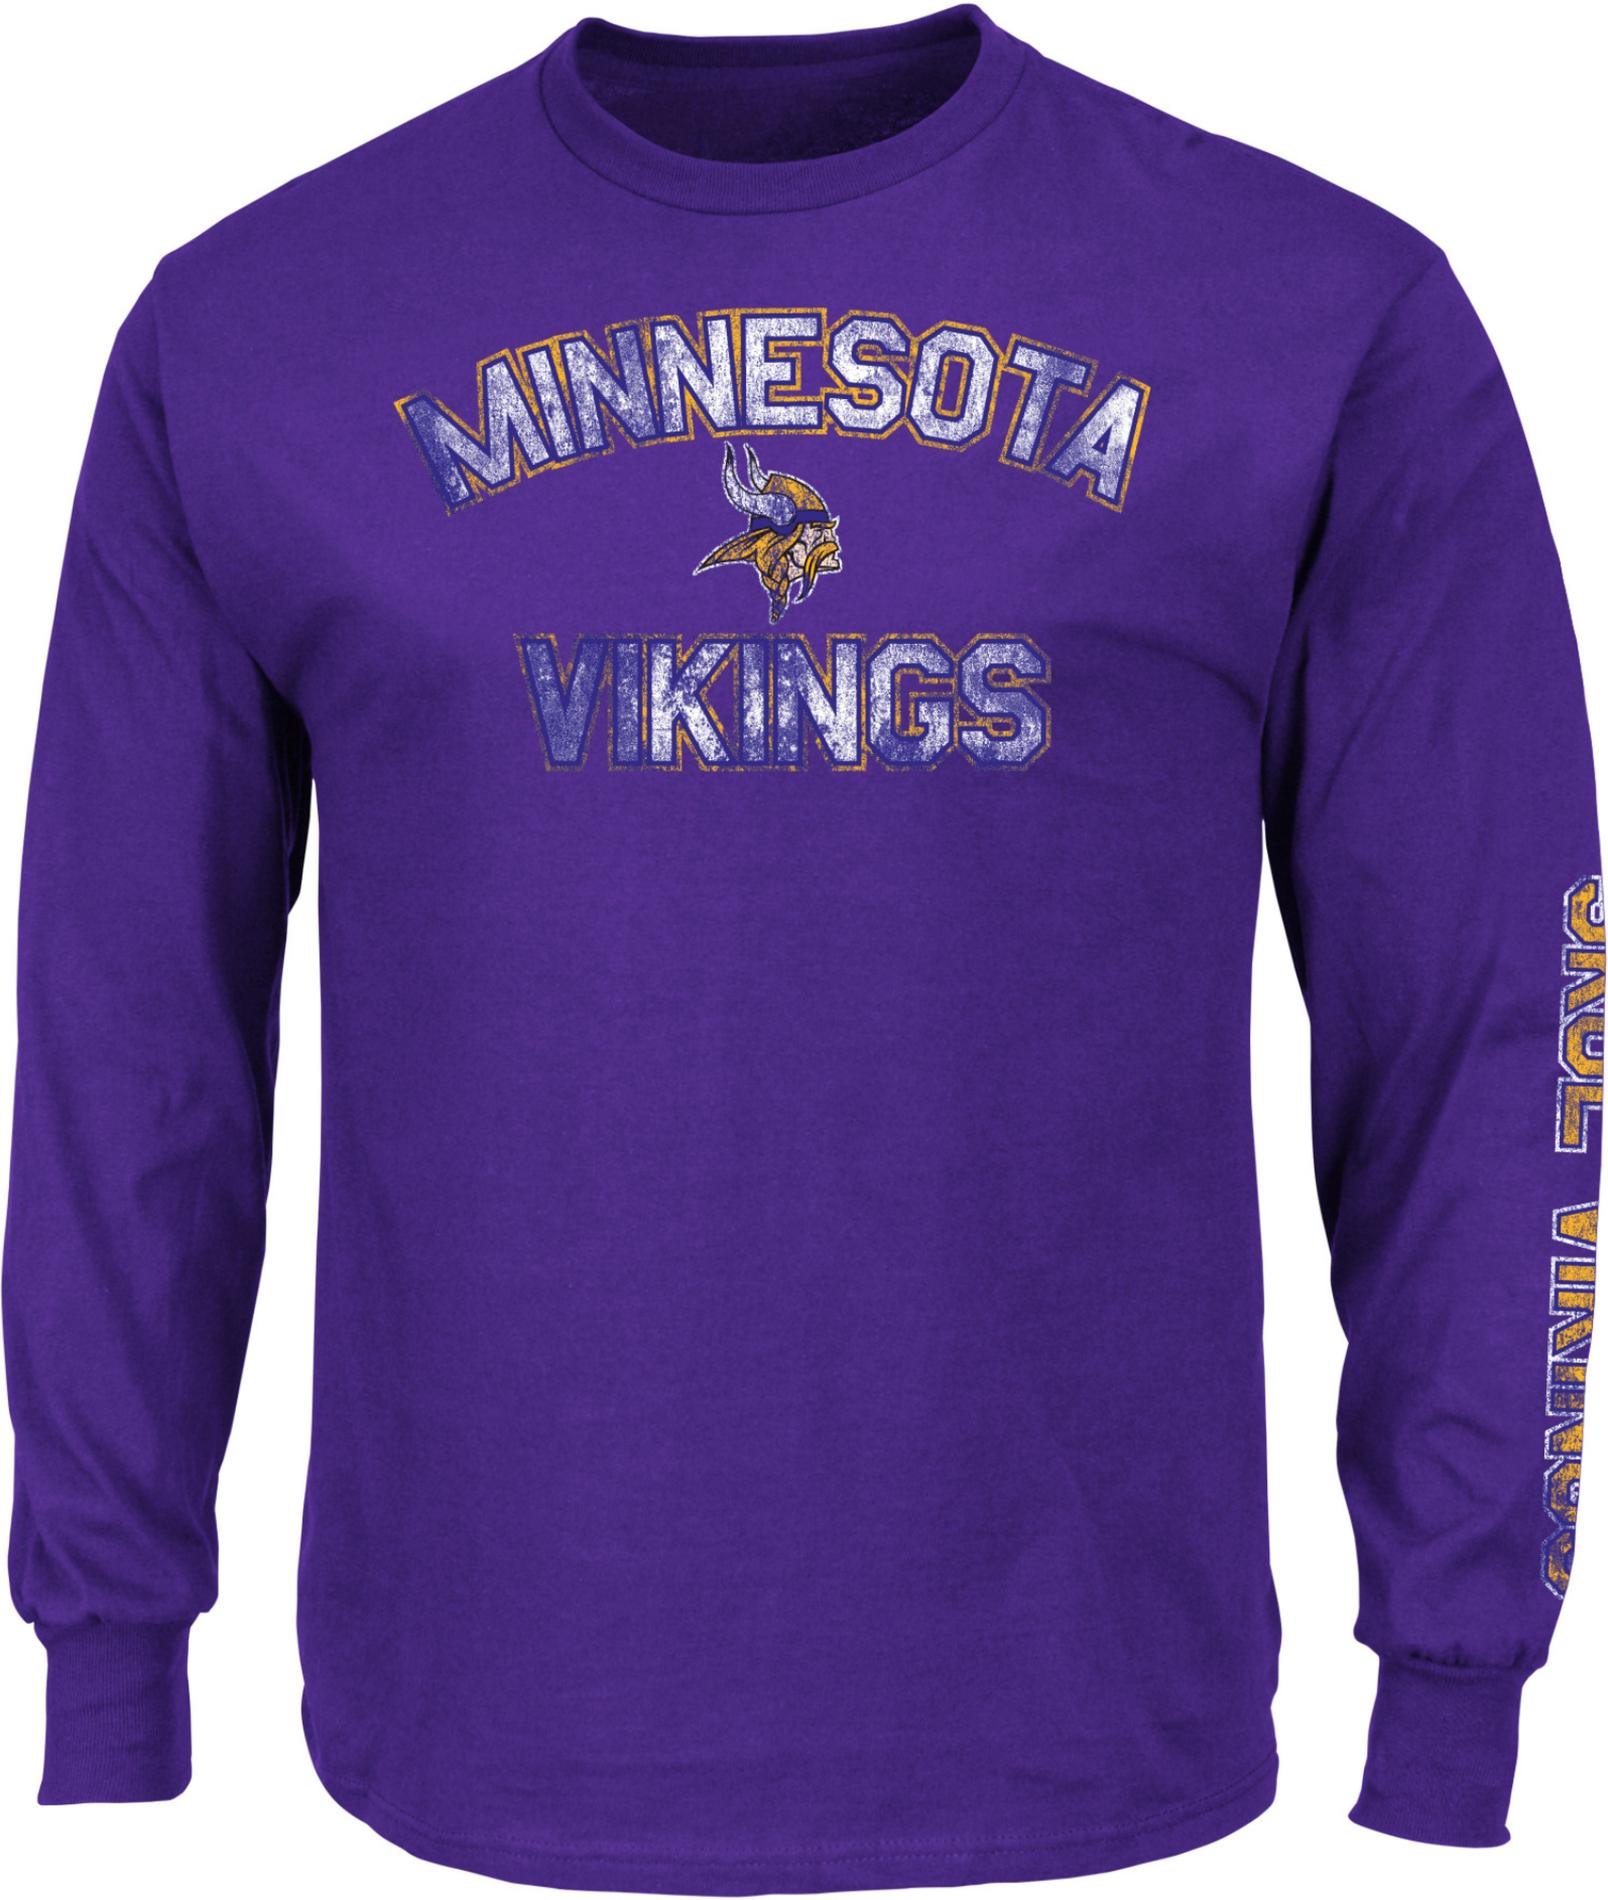 NFL Men's Graphic T-Shirt - Minnesota Vikings